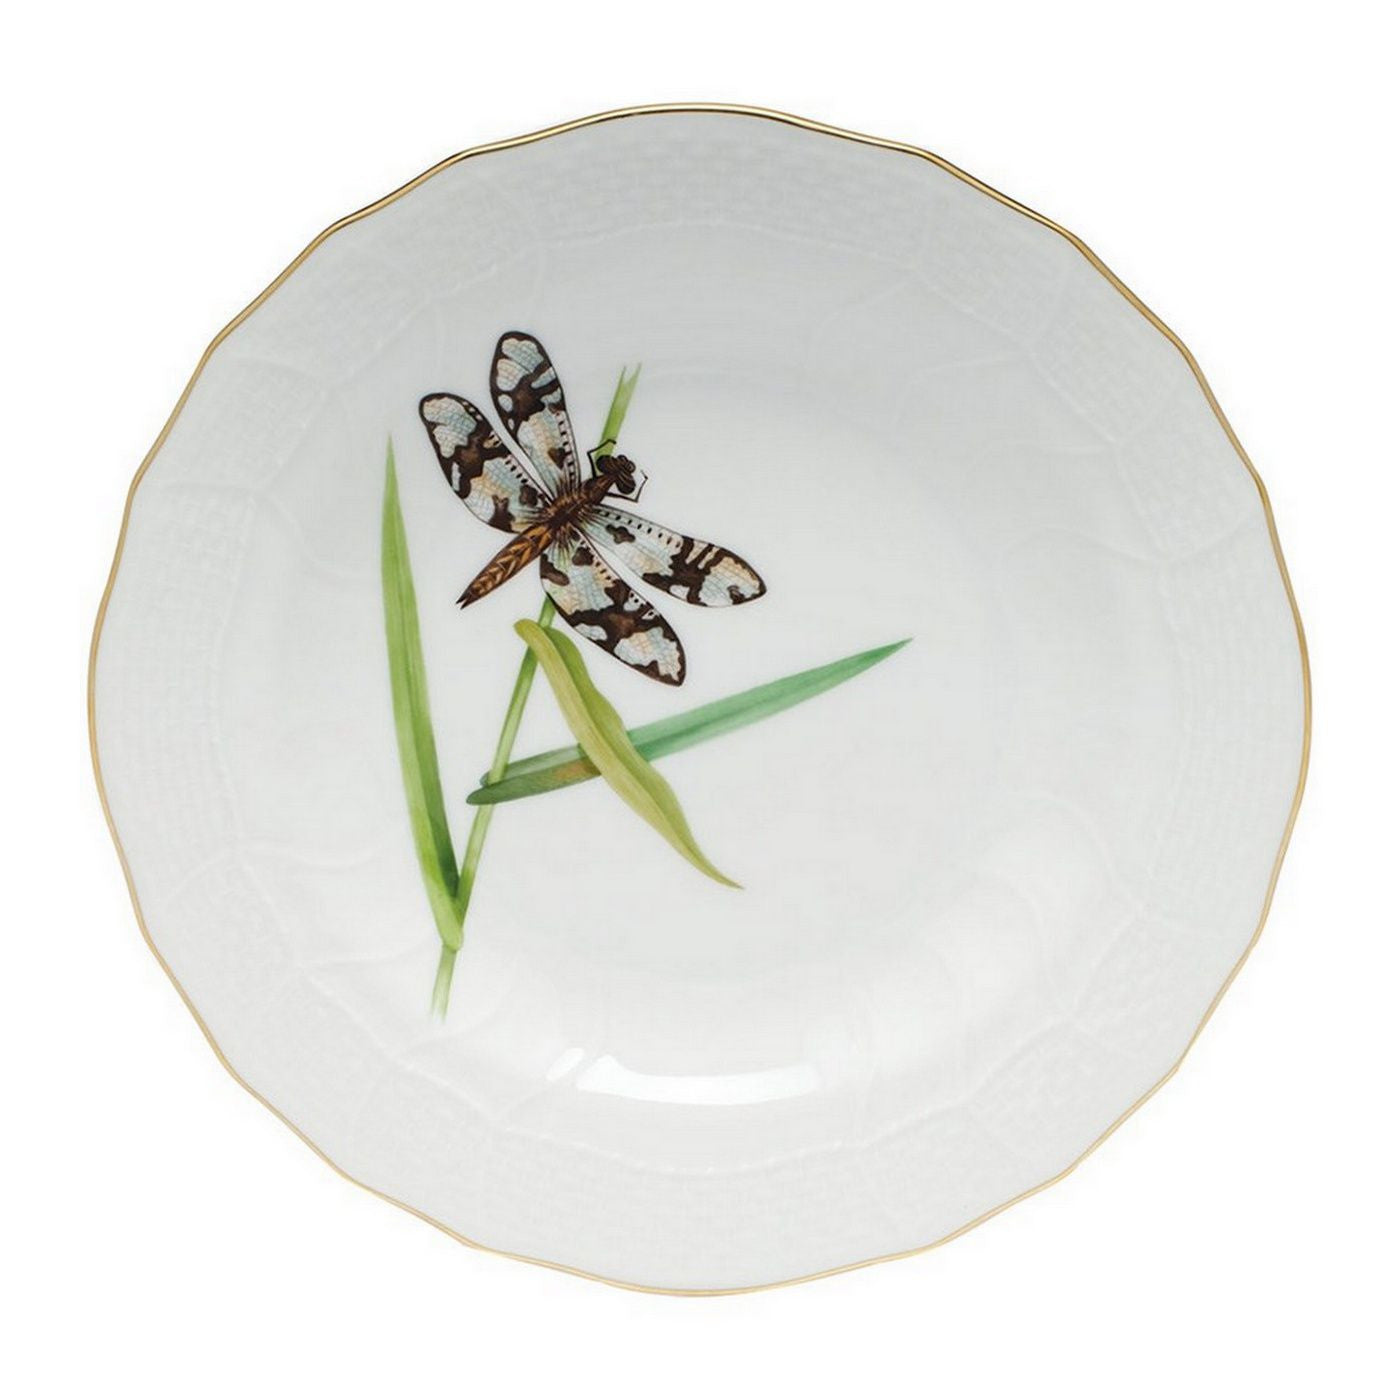 Brown Dragonfly Dessert Plate